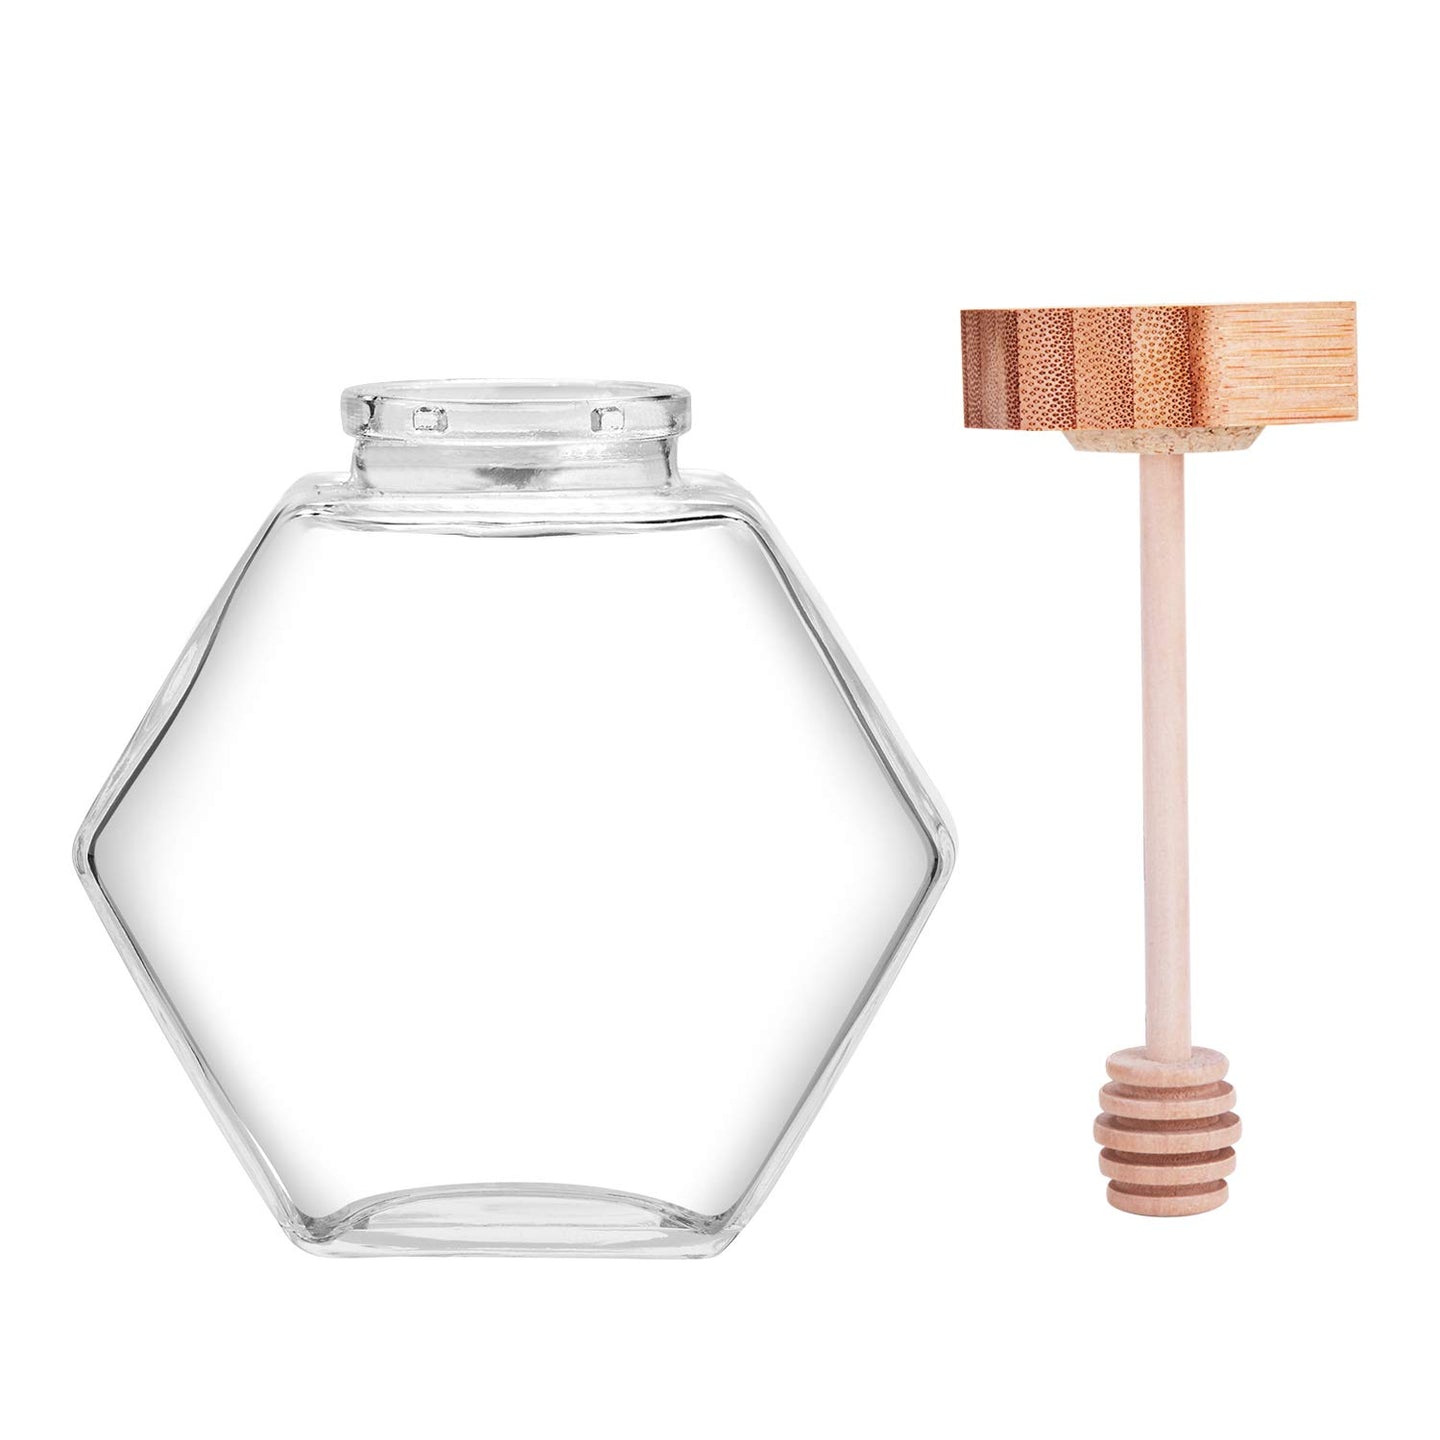 Honeycomb Honey Jar with Dipper